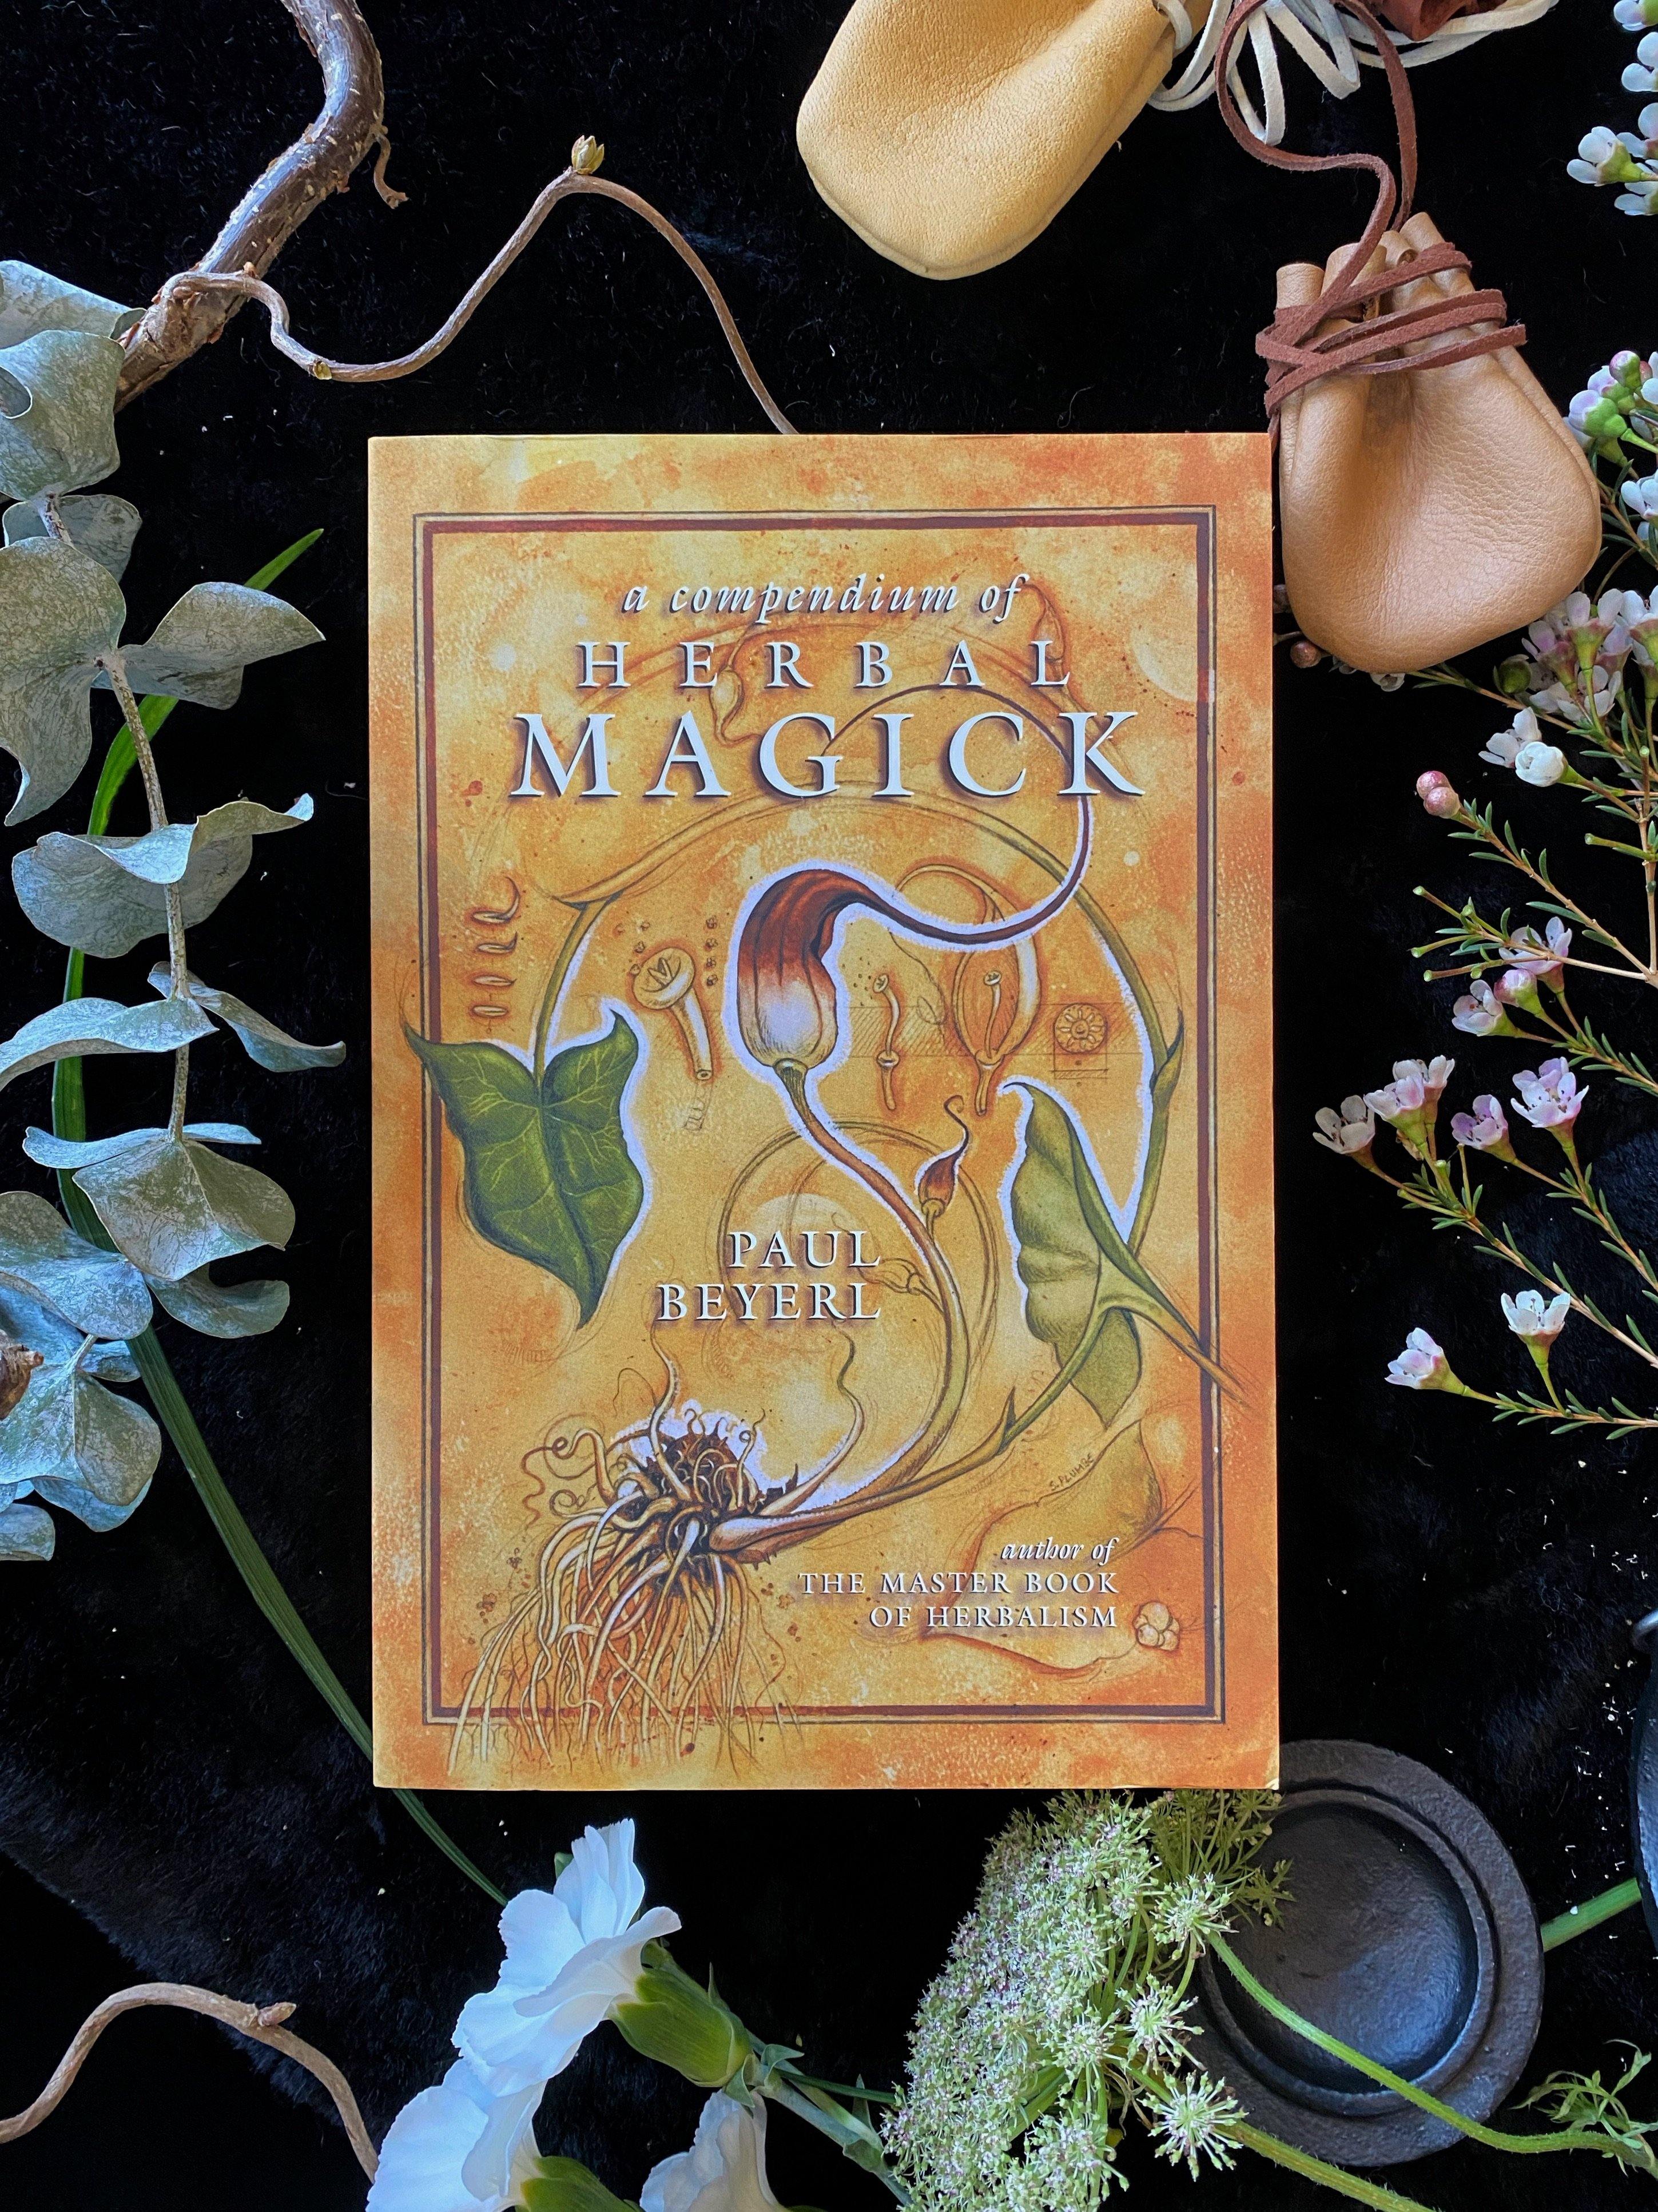 Compendium of Herbal Magick - Keven Craft Rituals